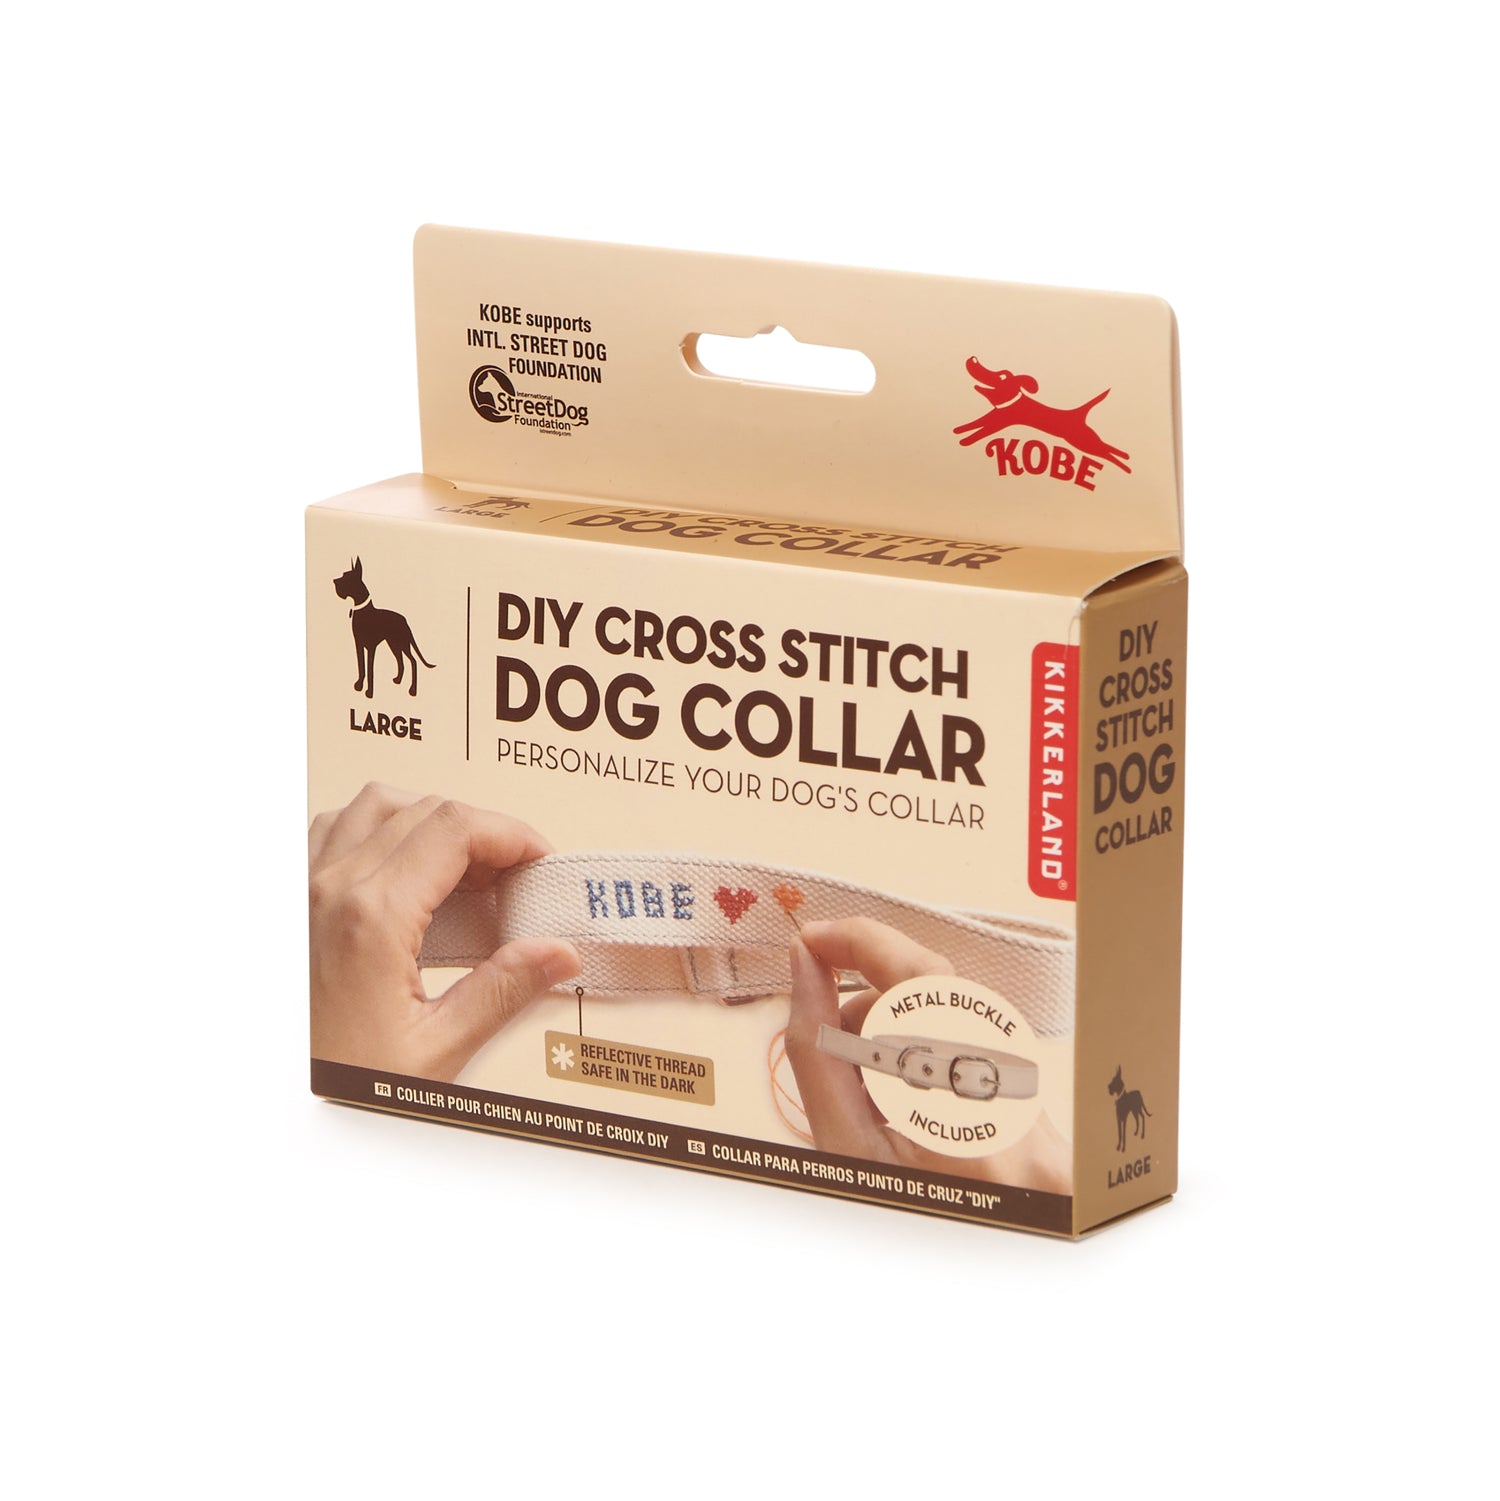 Kobe DIY Cross Stitch Dog Collar for Large Dogs